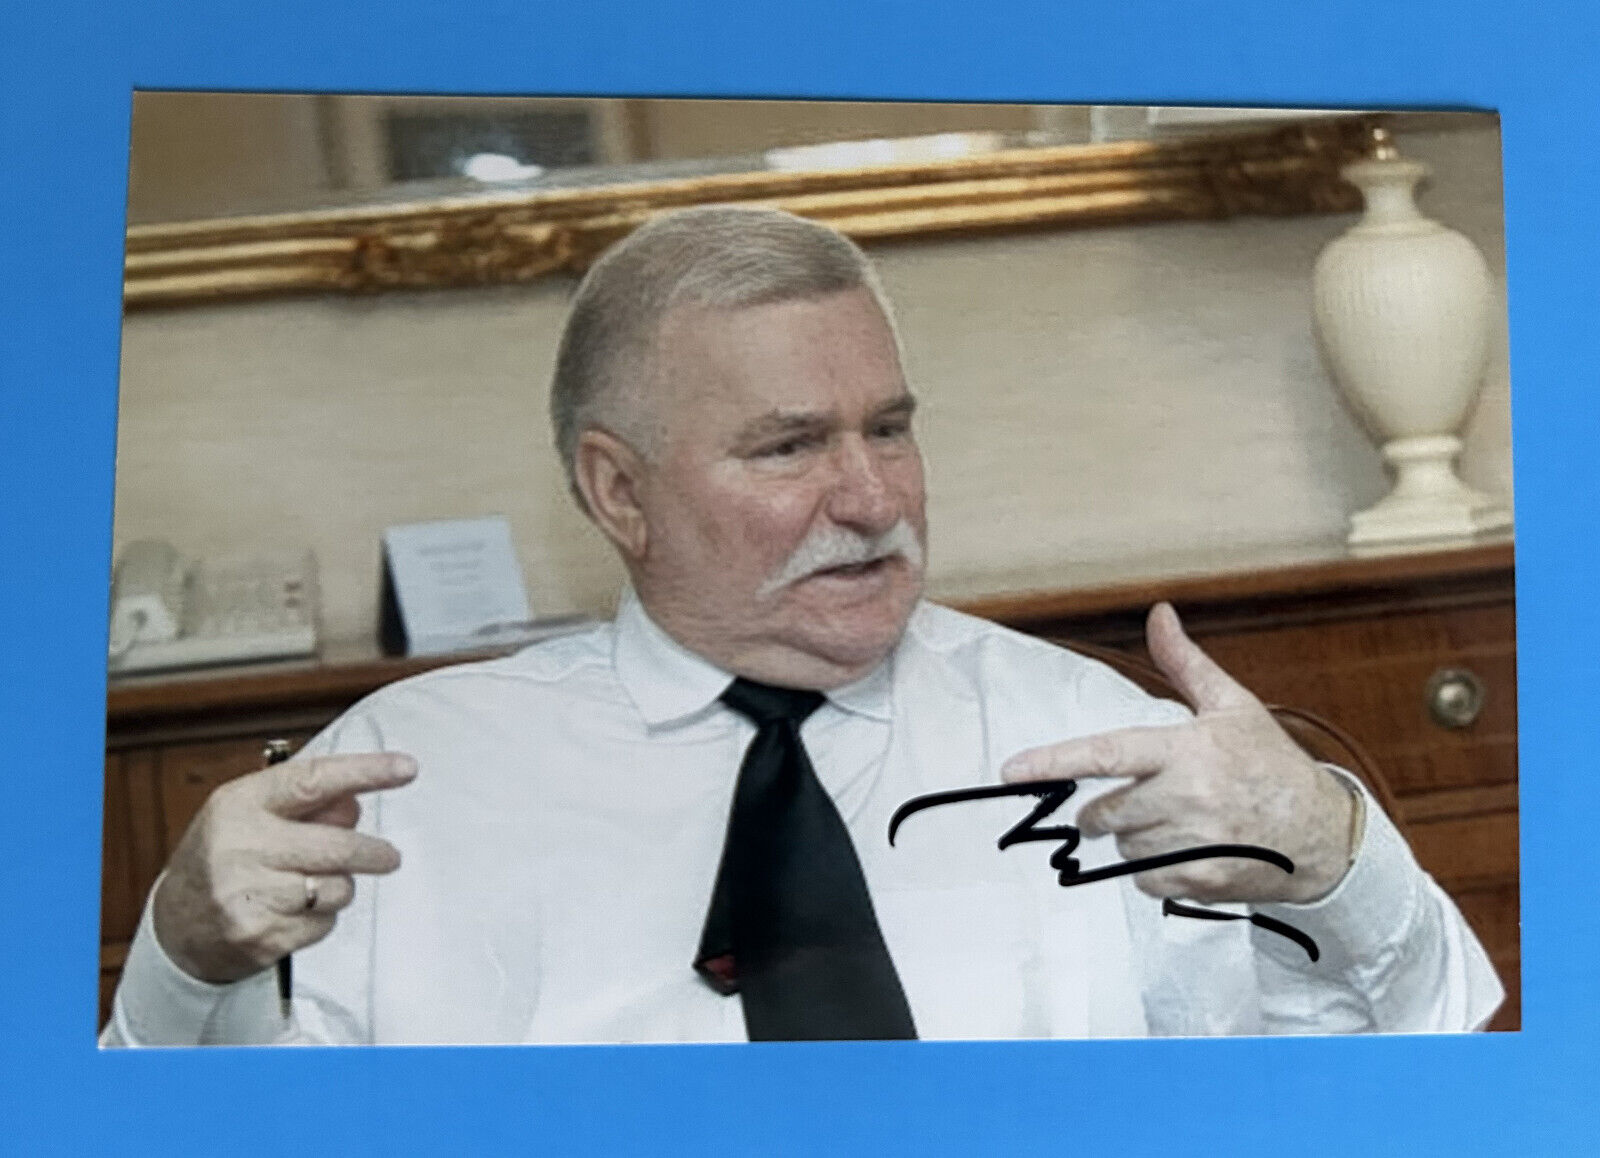 Lech Wałęsa (1983 Nobel Peace Prize) Hand Autographed Signed Photograph